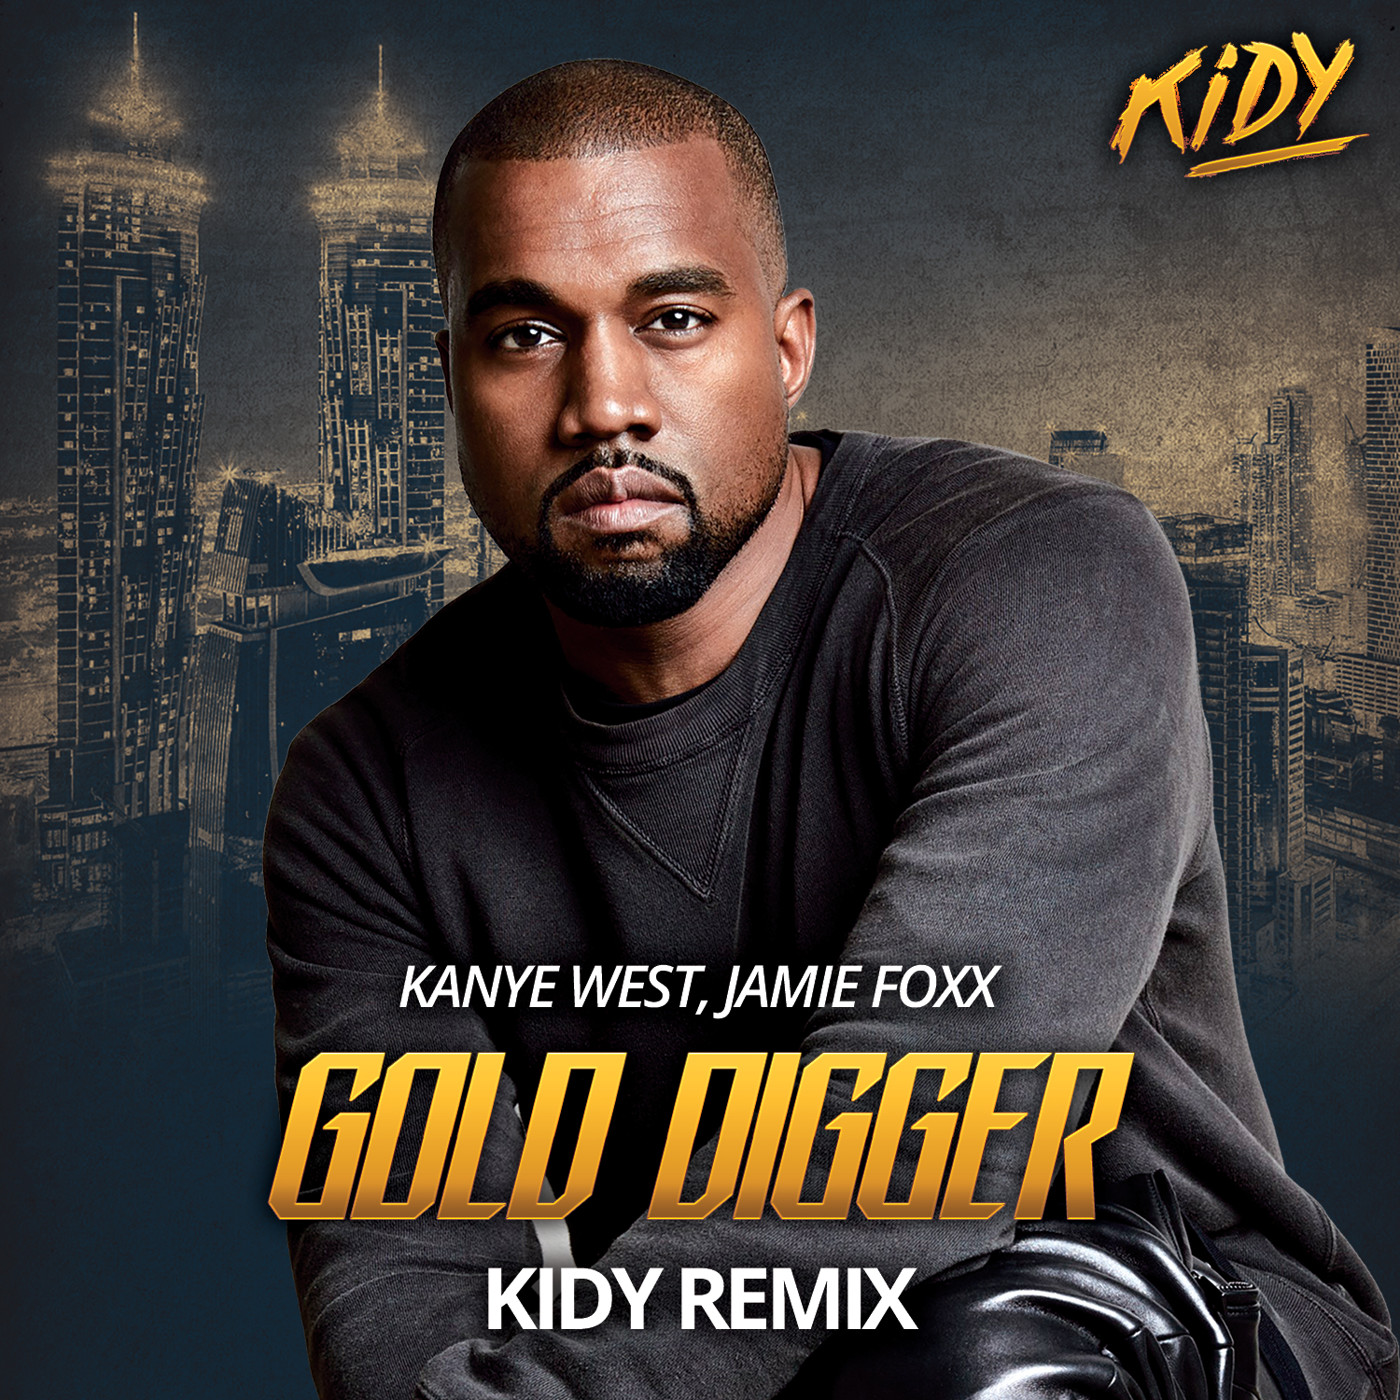 Kanye West, Jamie Foxx - Gold Digger (KIDY Remix)